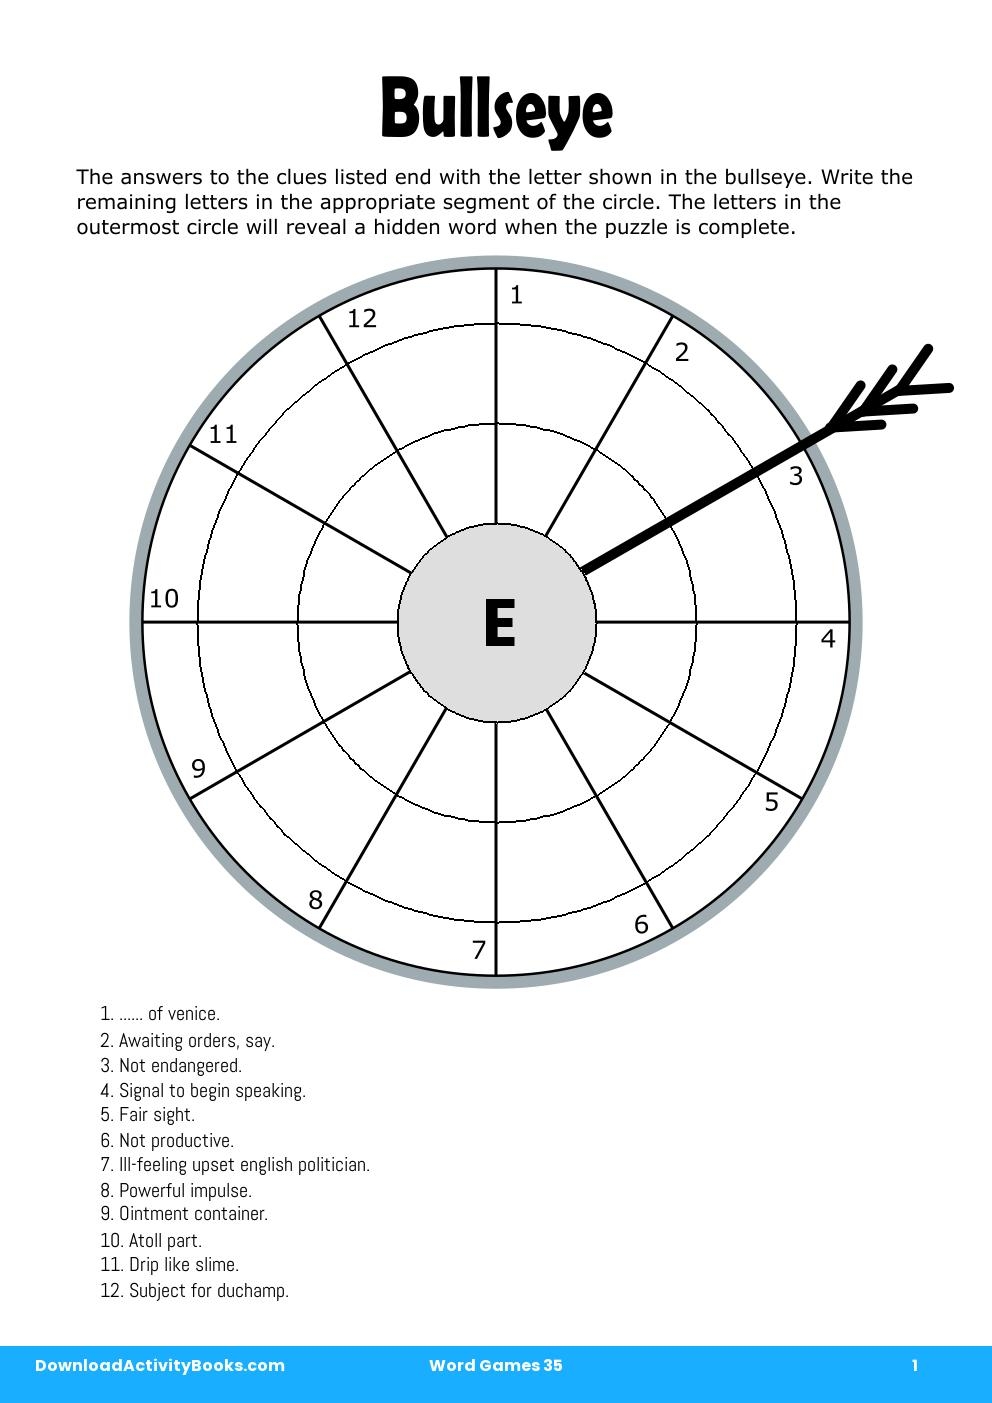 Bullseye in Word Games 35